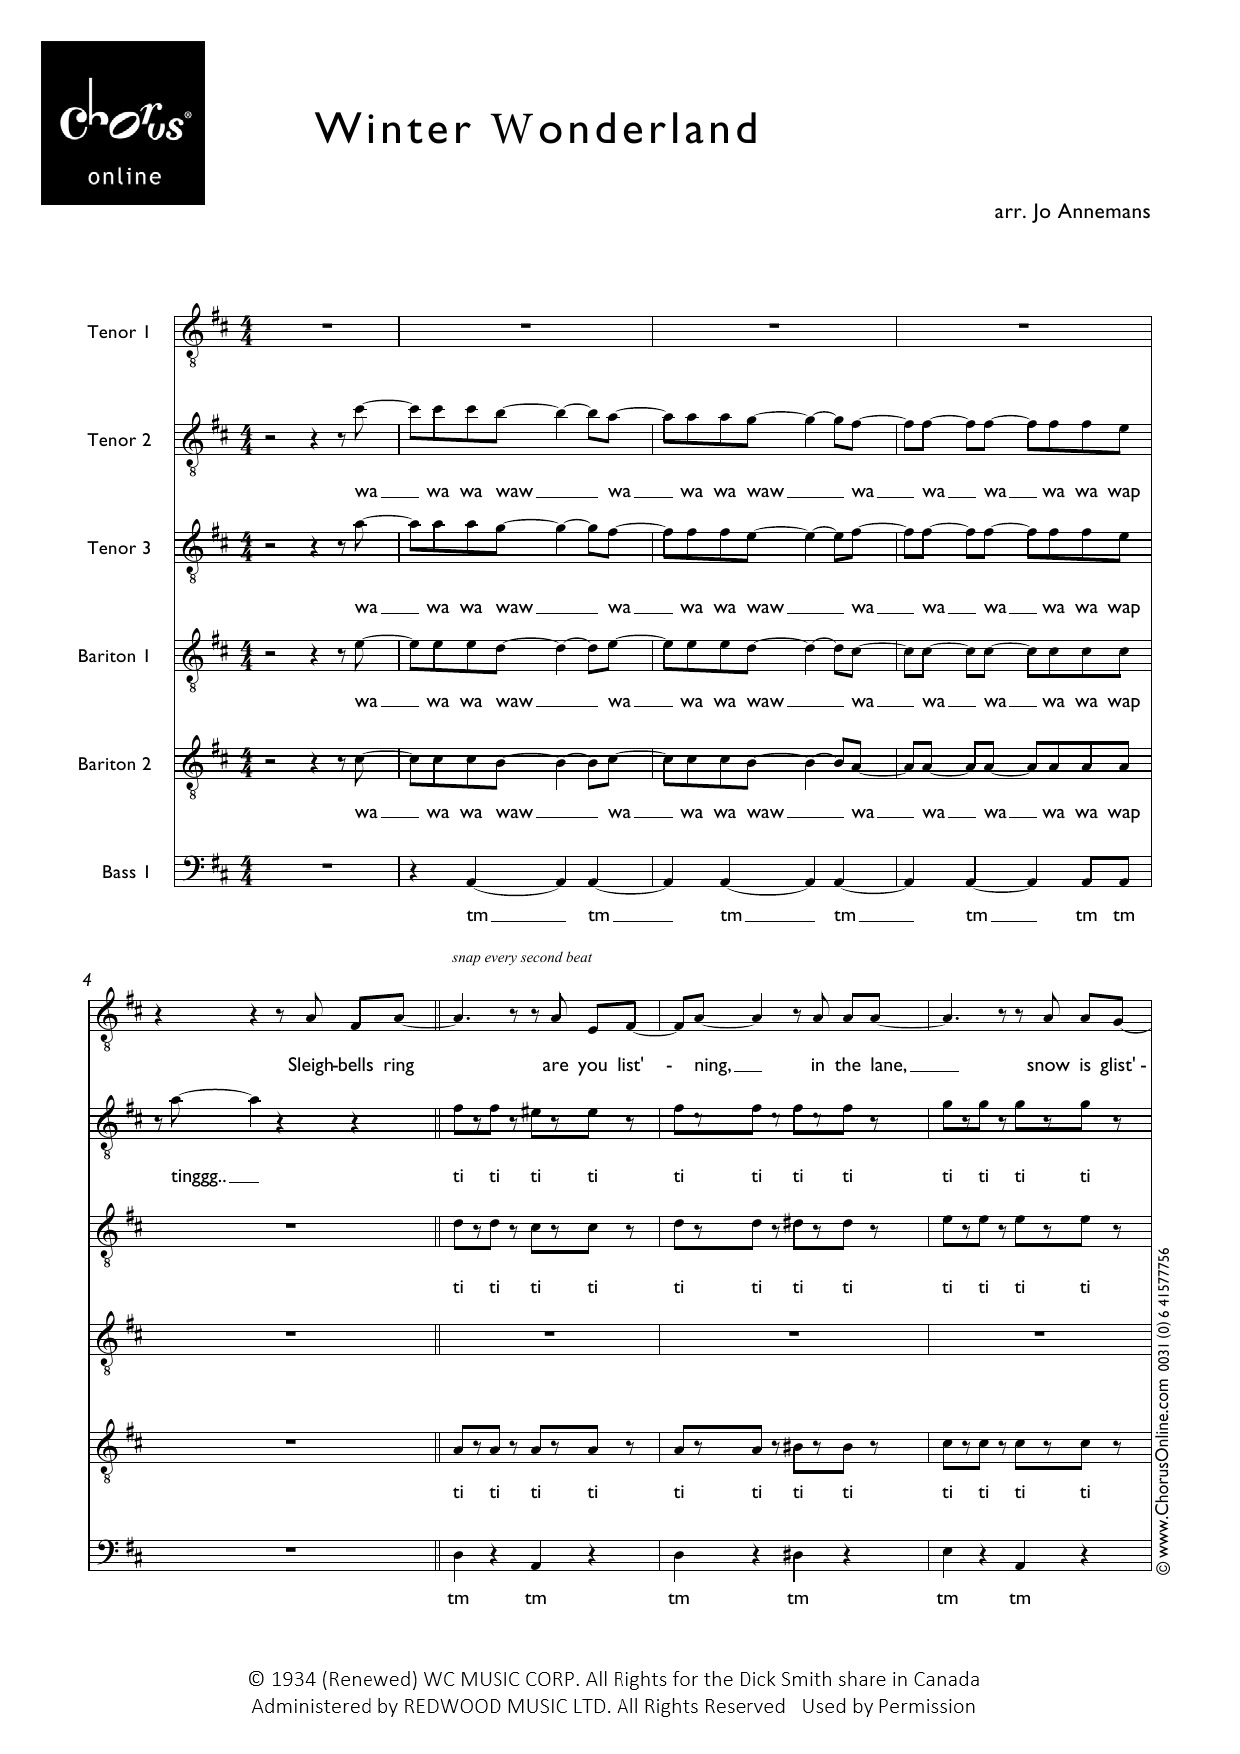 Voice Male Winter Wonderland (arr. Jo Annemans) sheet music notes printable PDF score